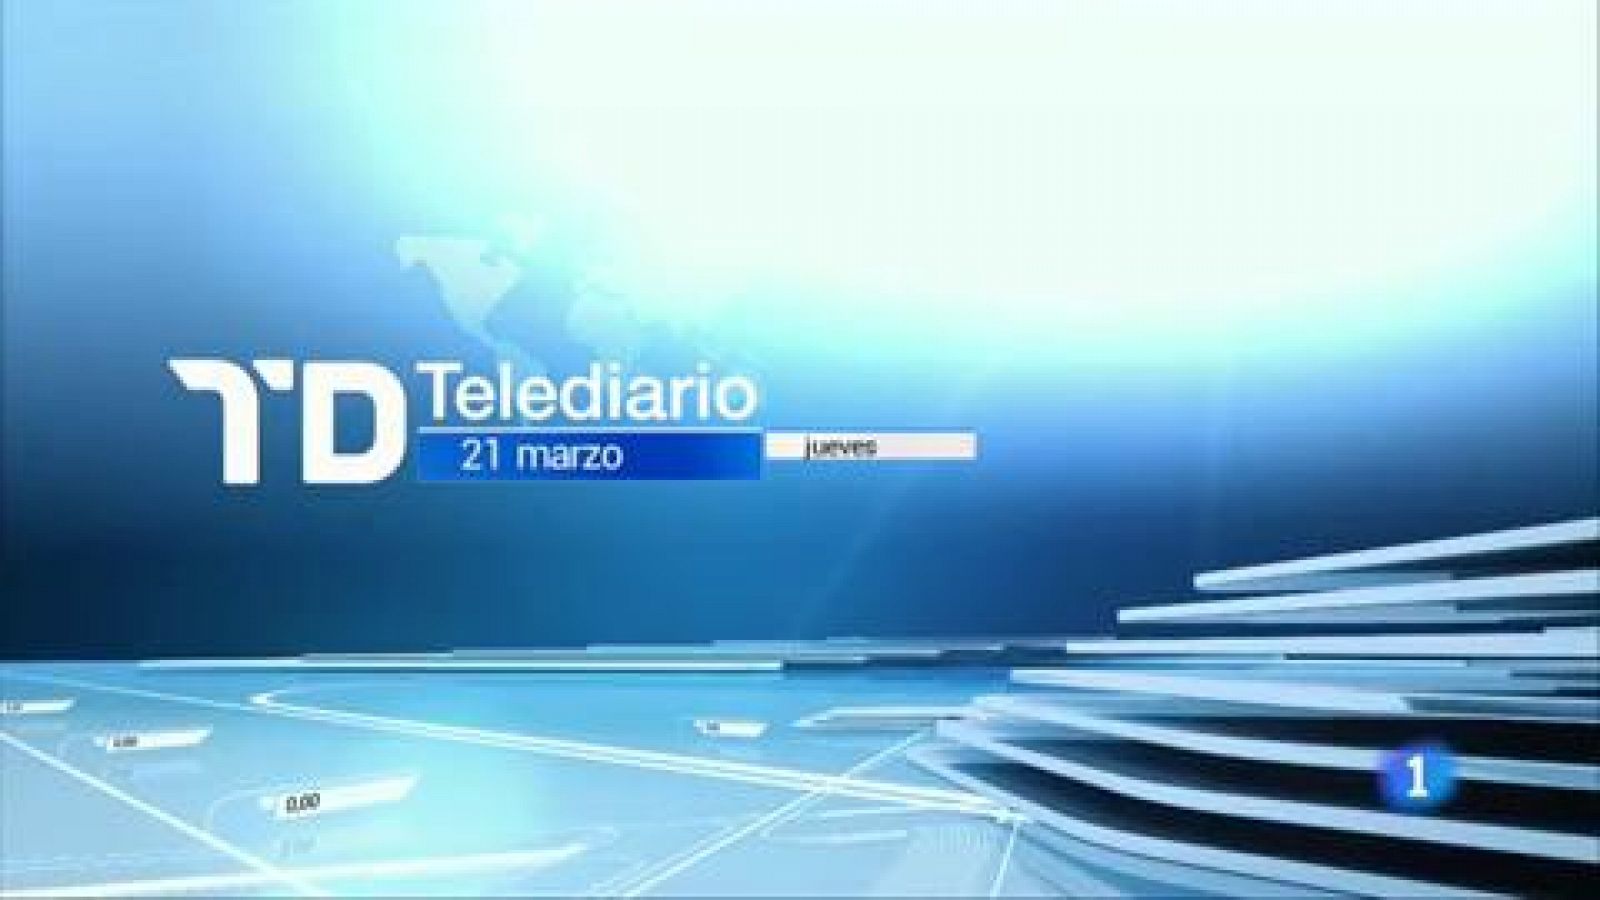 Telediario 1: Telediario 2 en 4' - 21/03/19 | RTVE Play